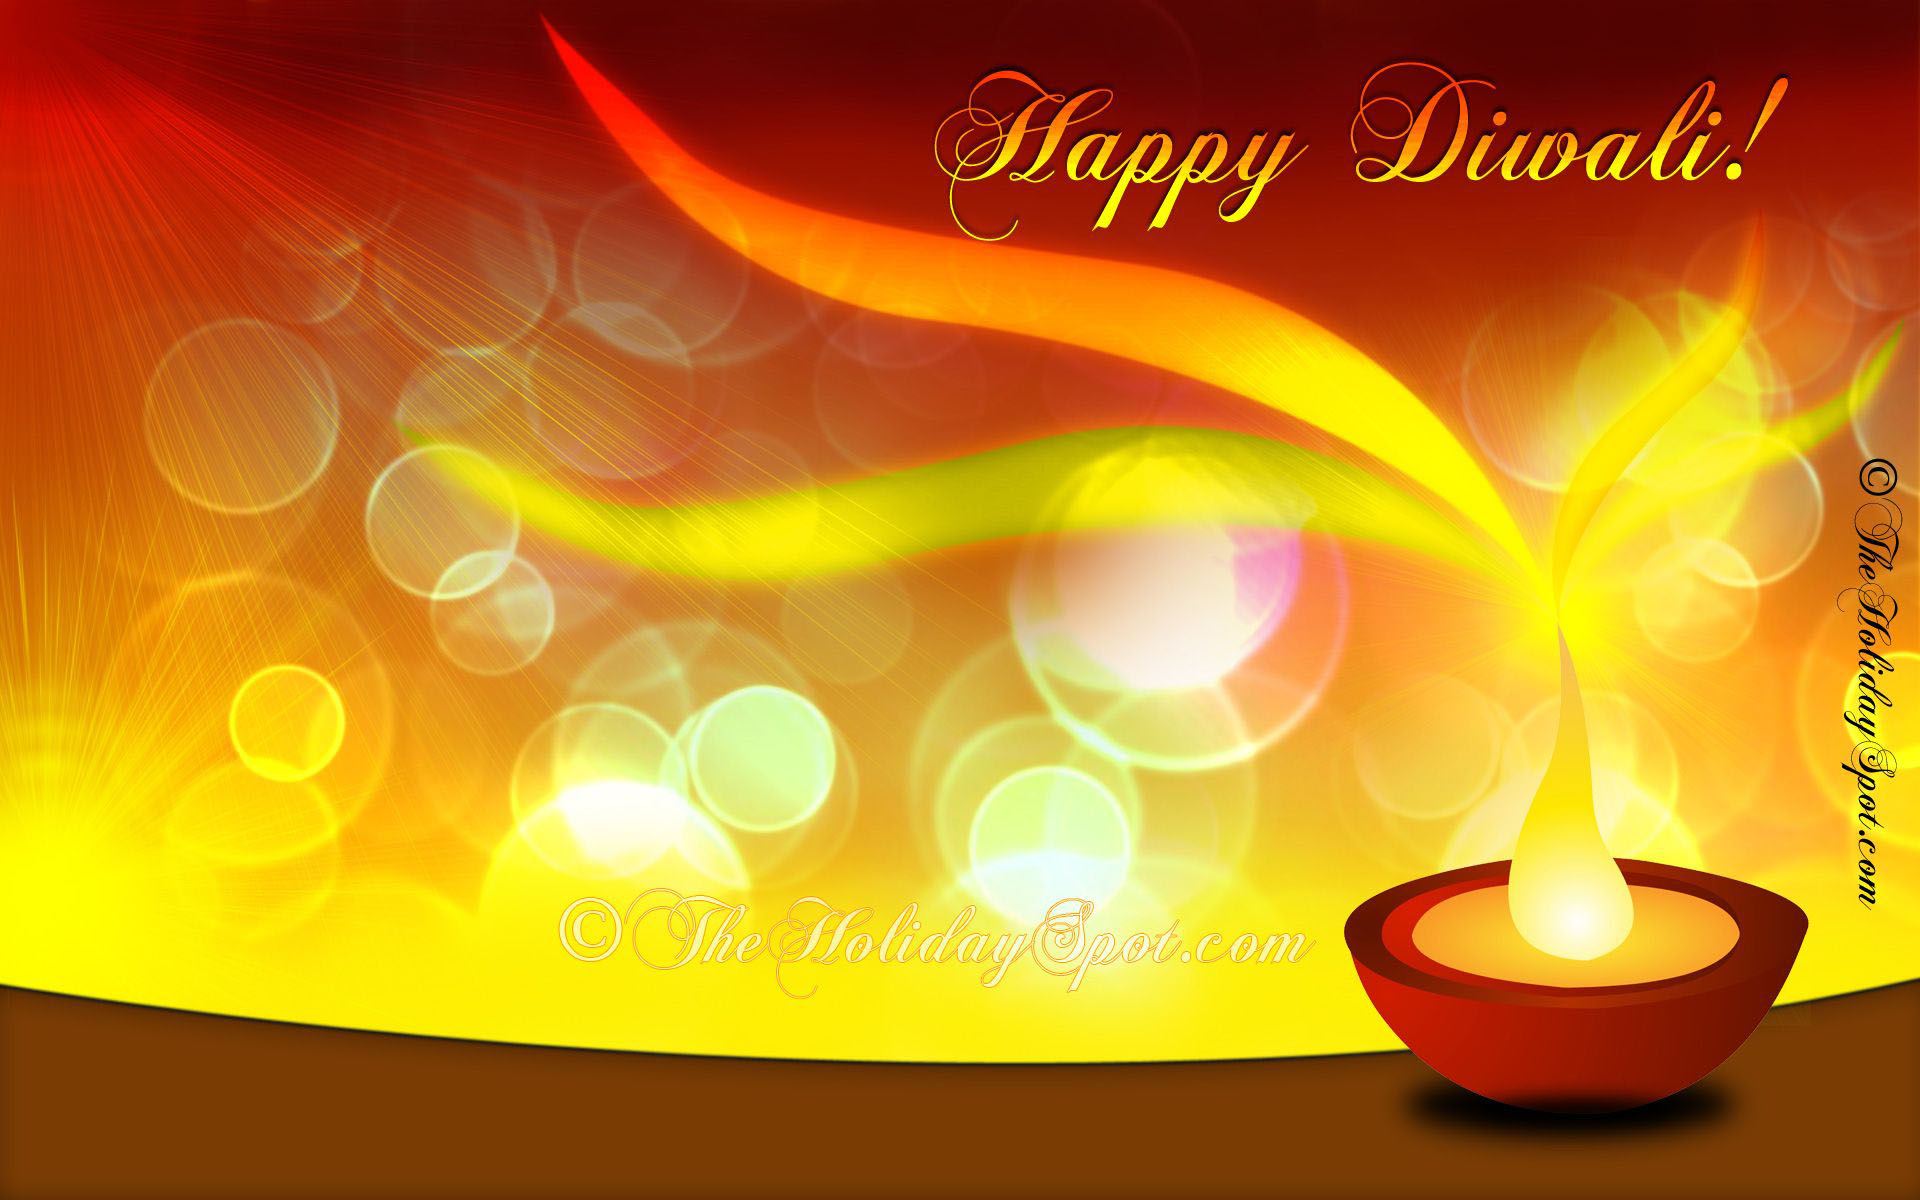 50 Beautiful Diwali Wallpapers for your desktop - Part 2